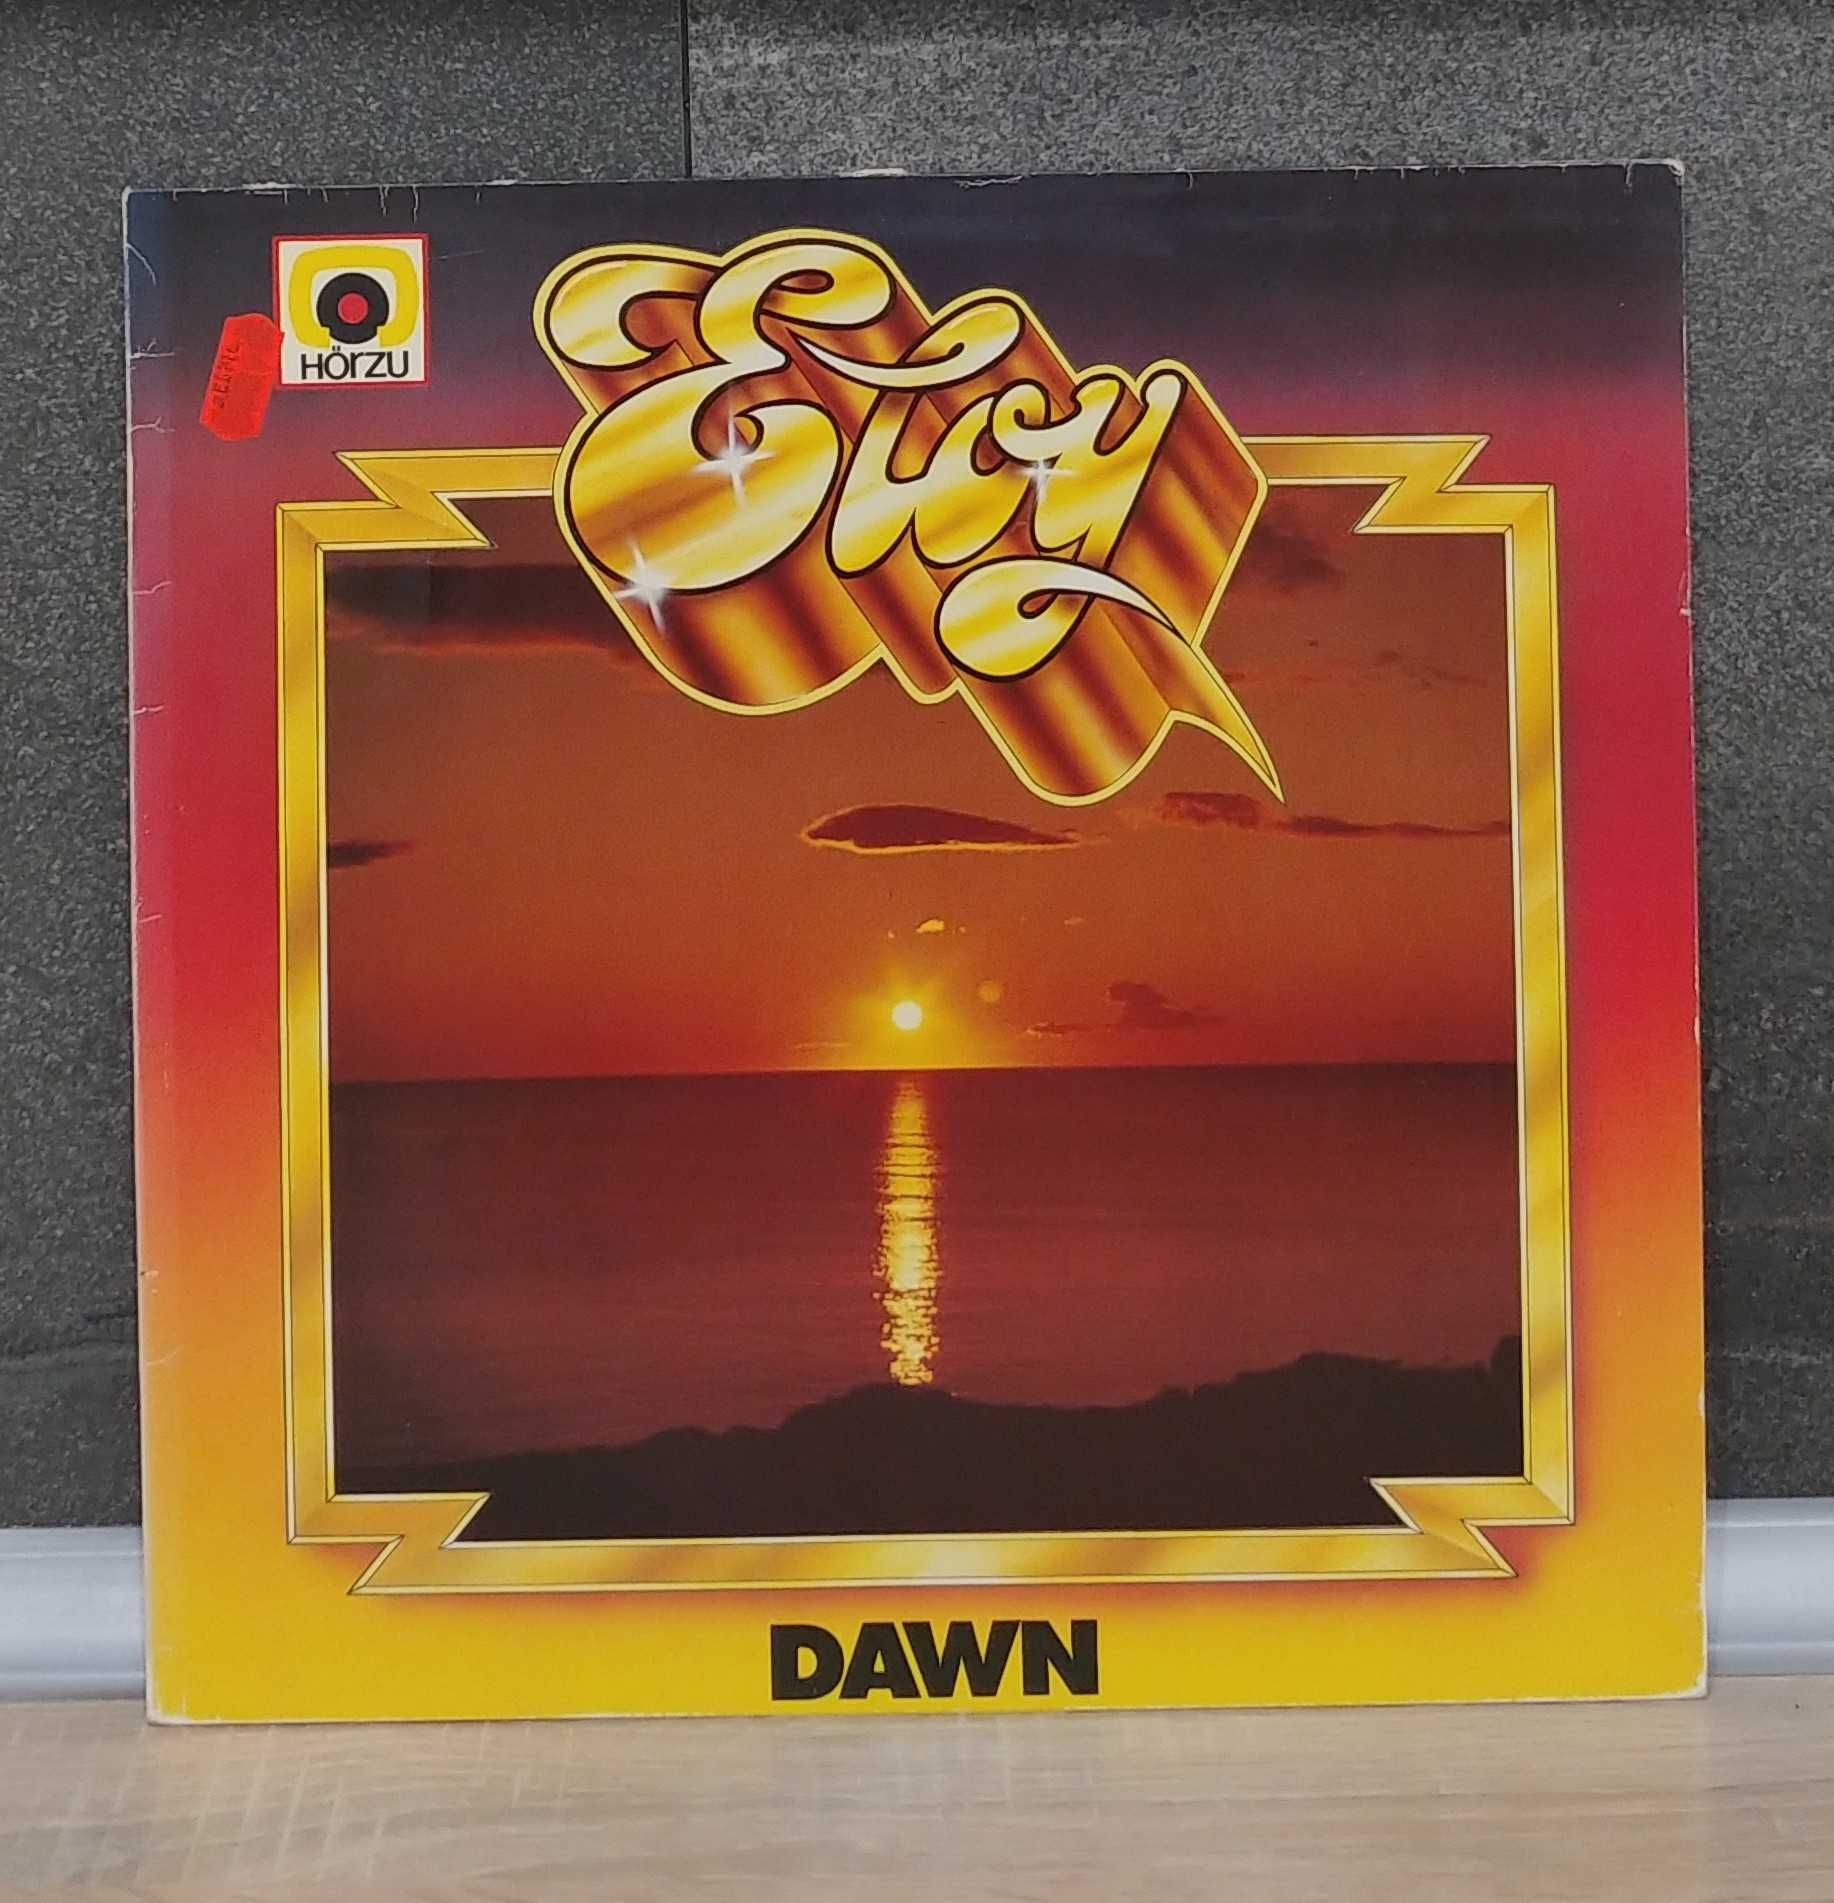 Eloy - Dawn . 1976r Hor Zu. EX+. Germany. Płyta winylowa .